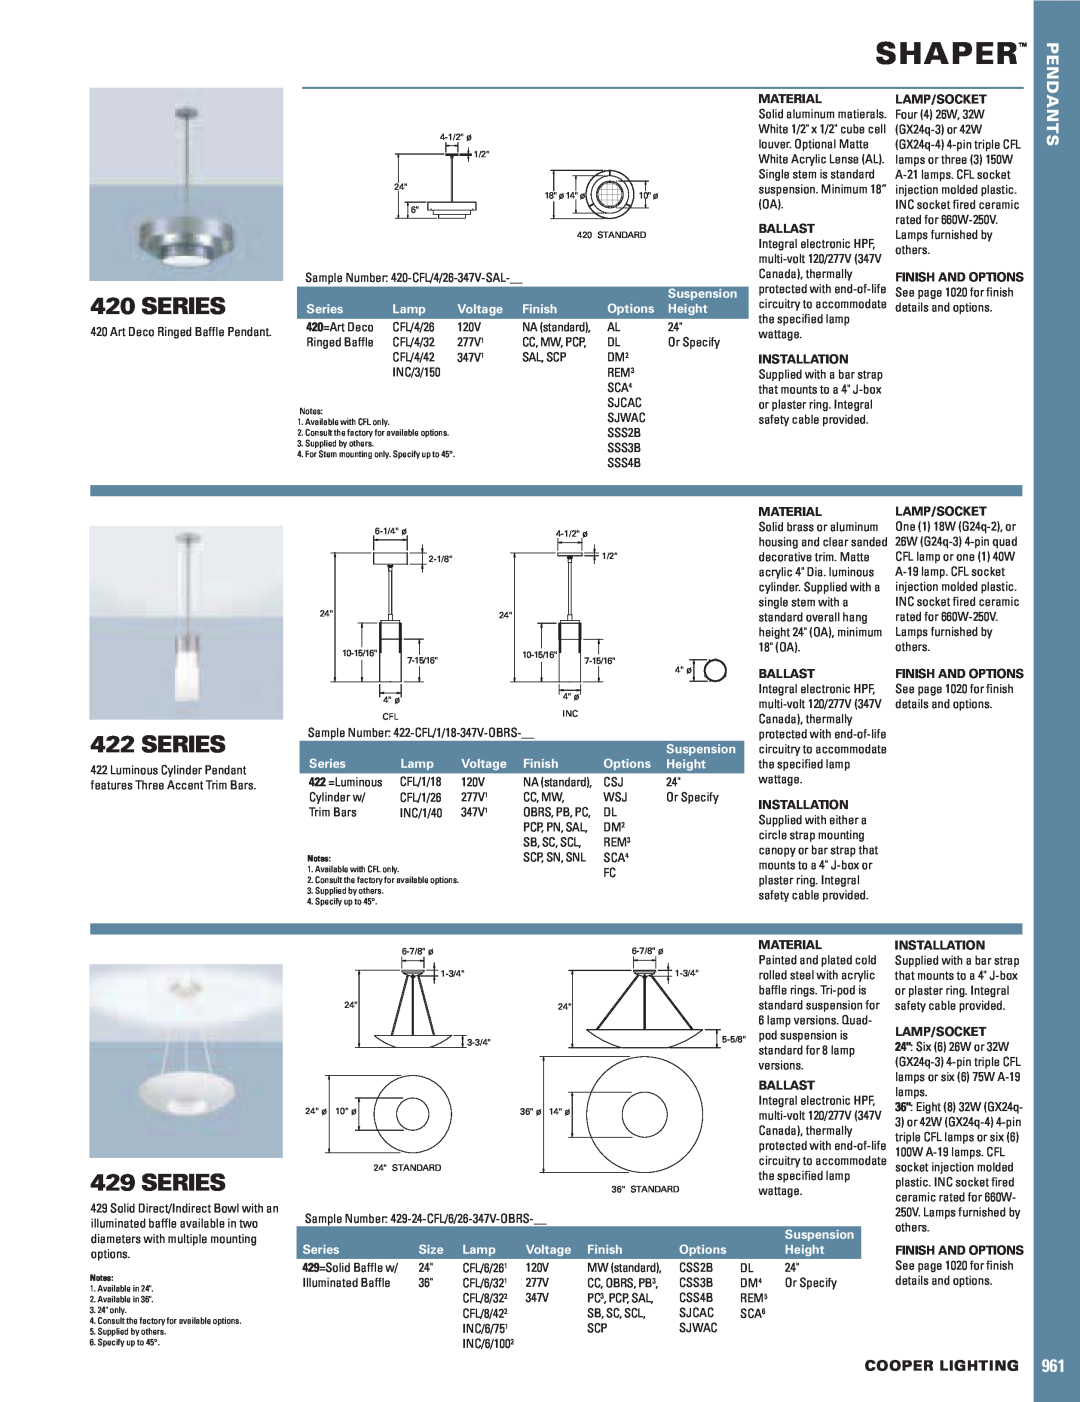 Cooper Lighting 422, 429 manual Shaper, Series, Cooper Lighting, Material, Ballast, Installation, Lamp/Socket 